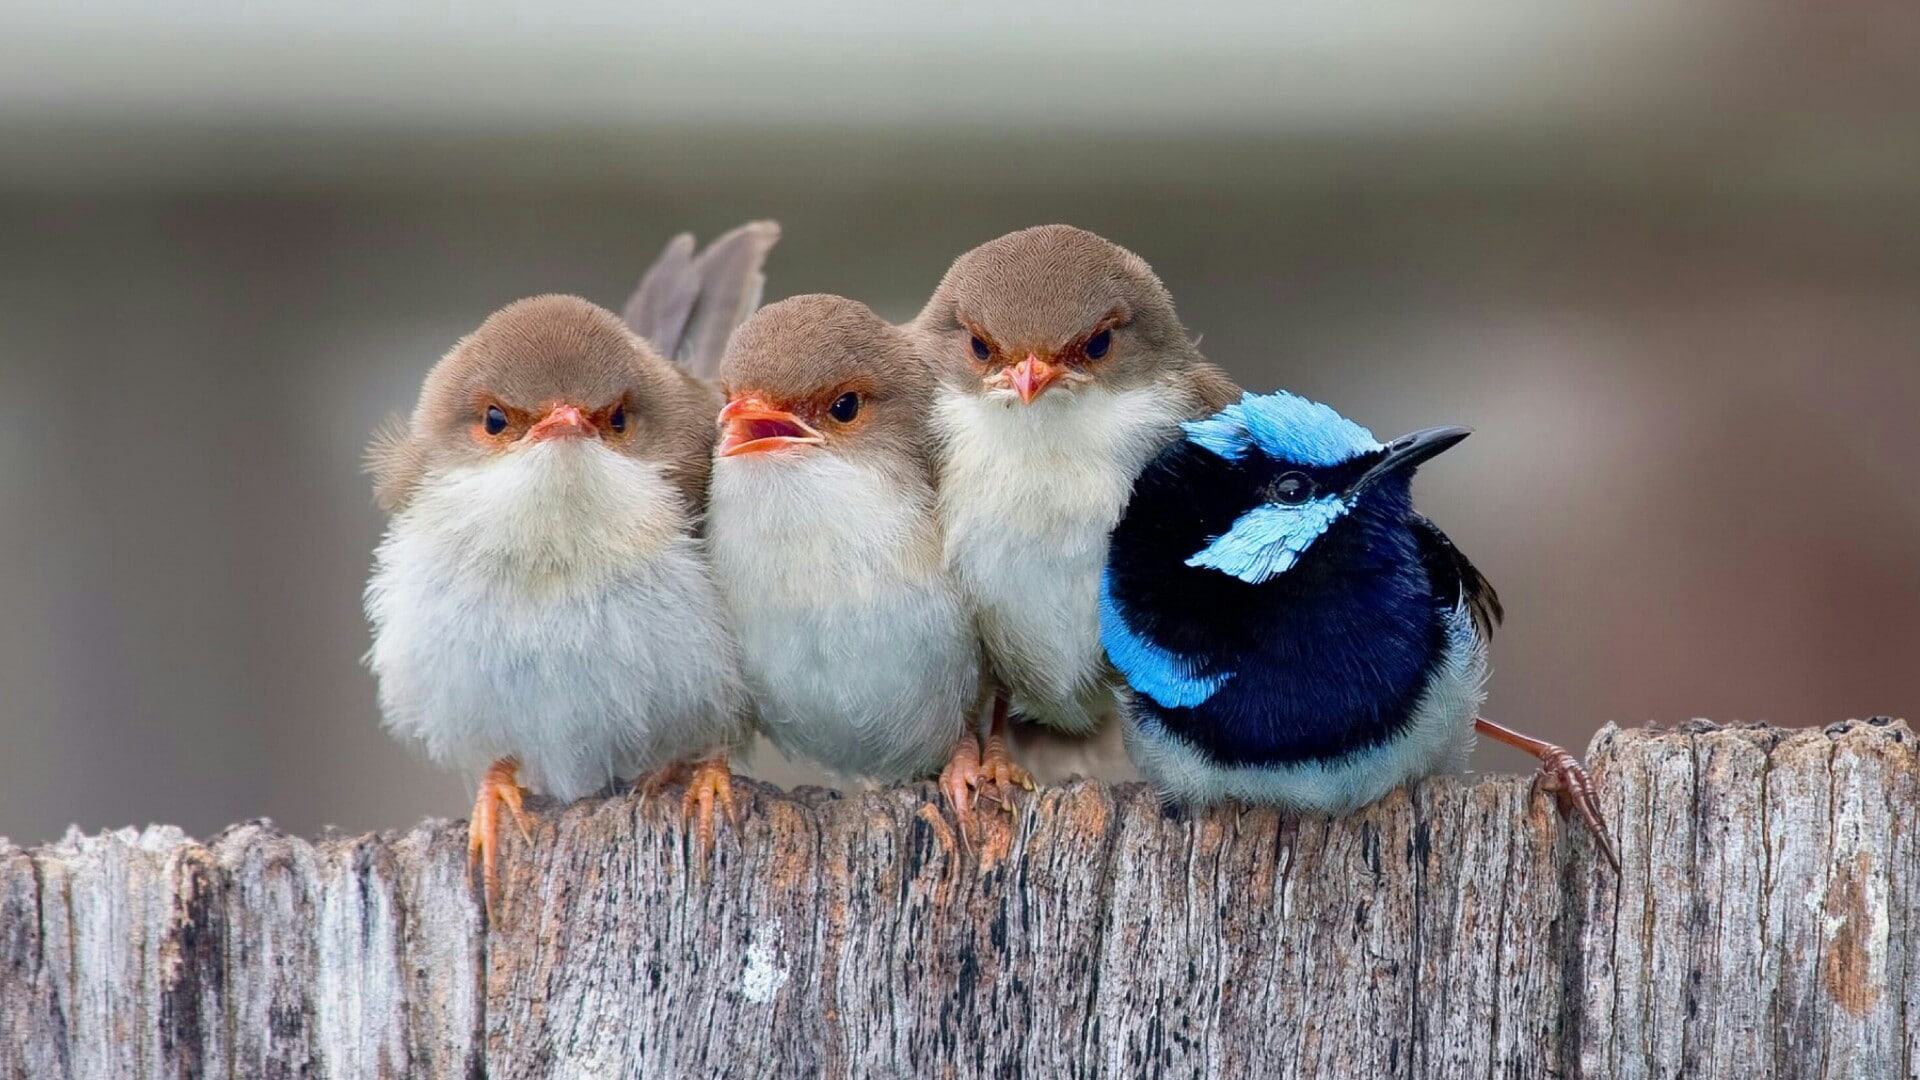 birds, cute, fuzzy, little bird, huddle